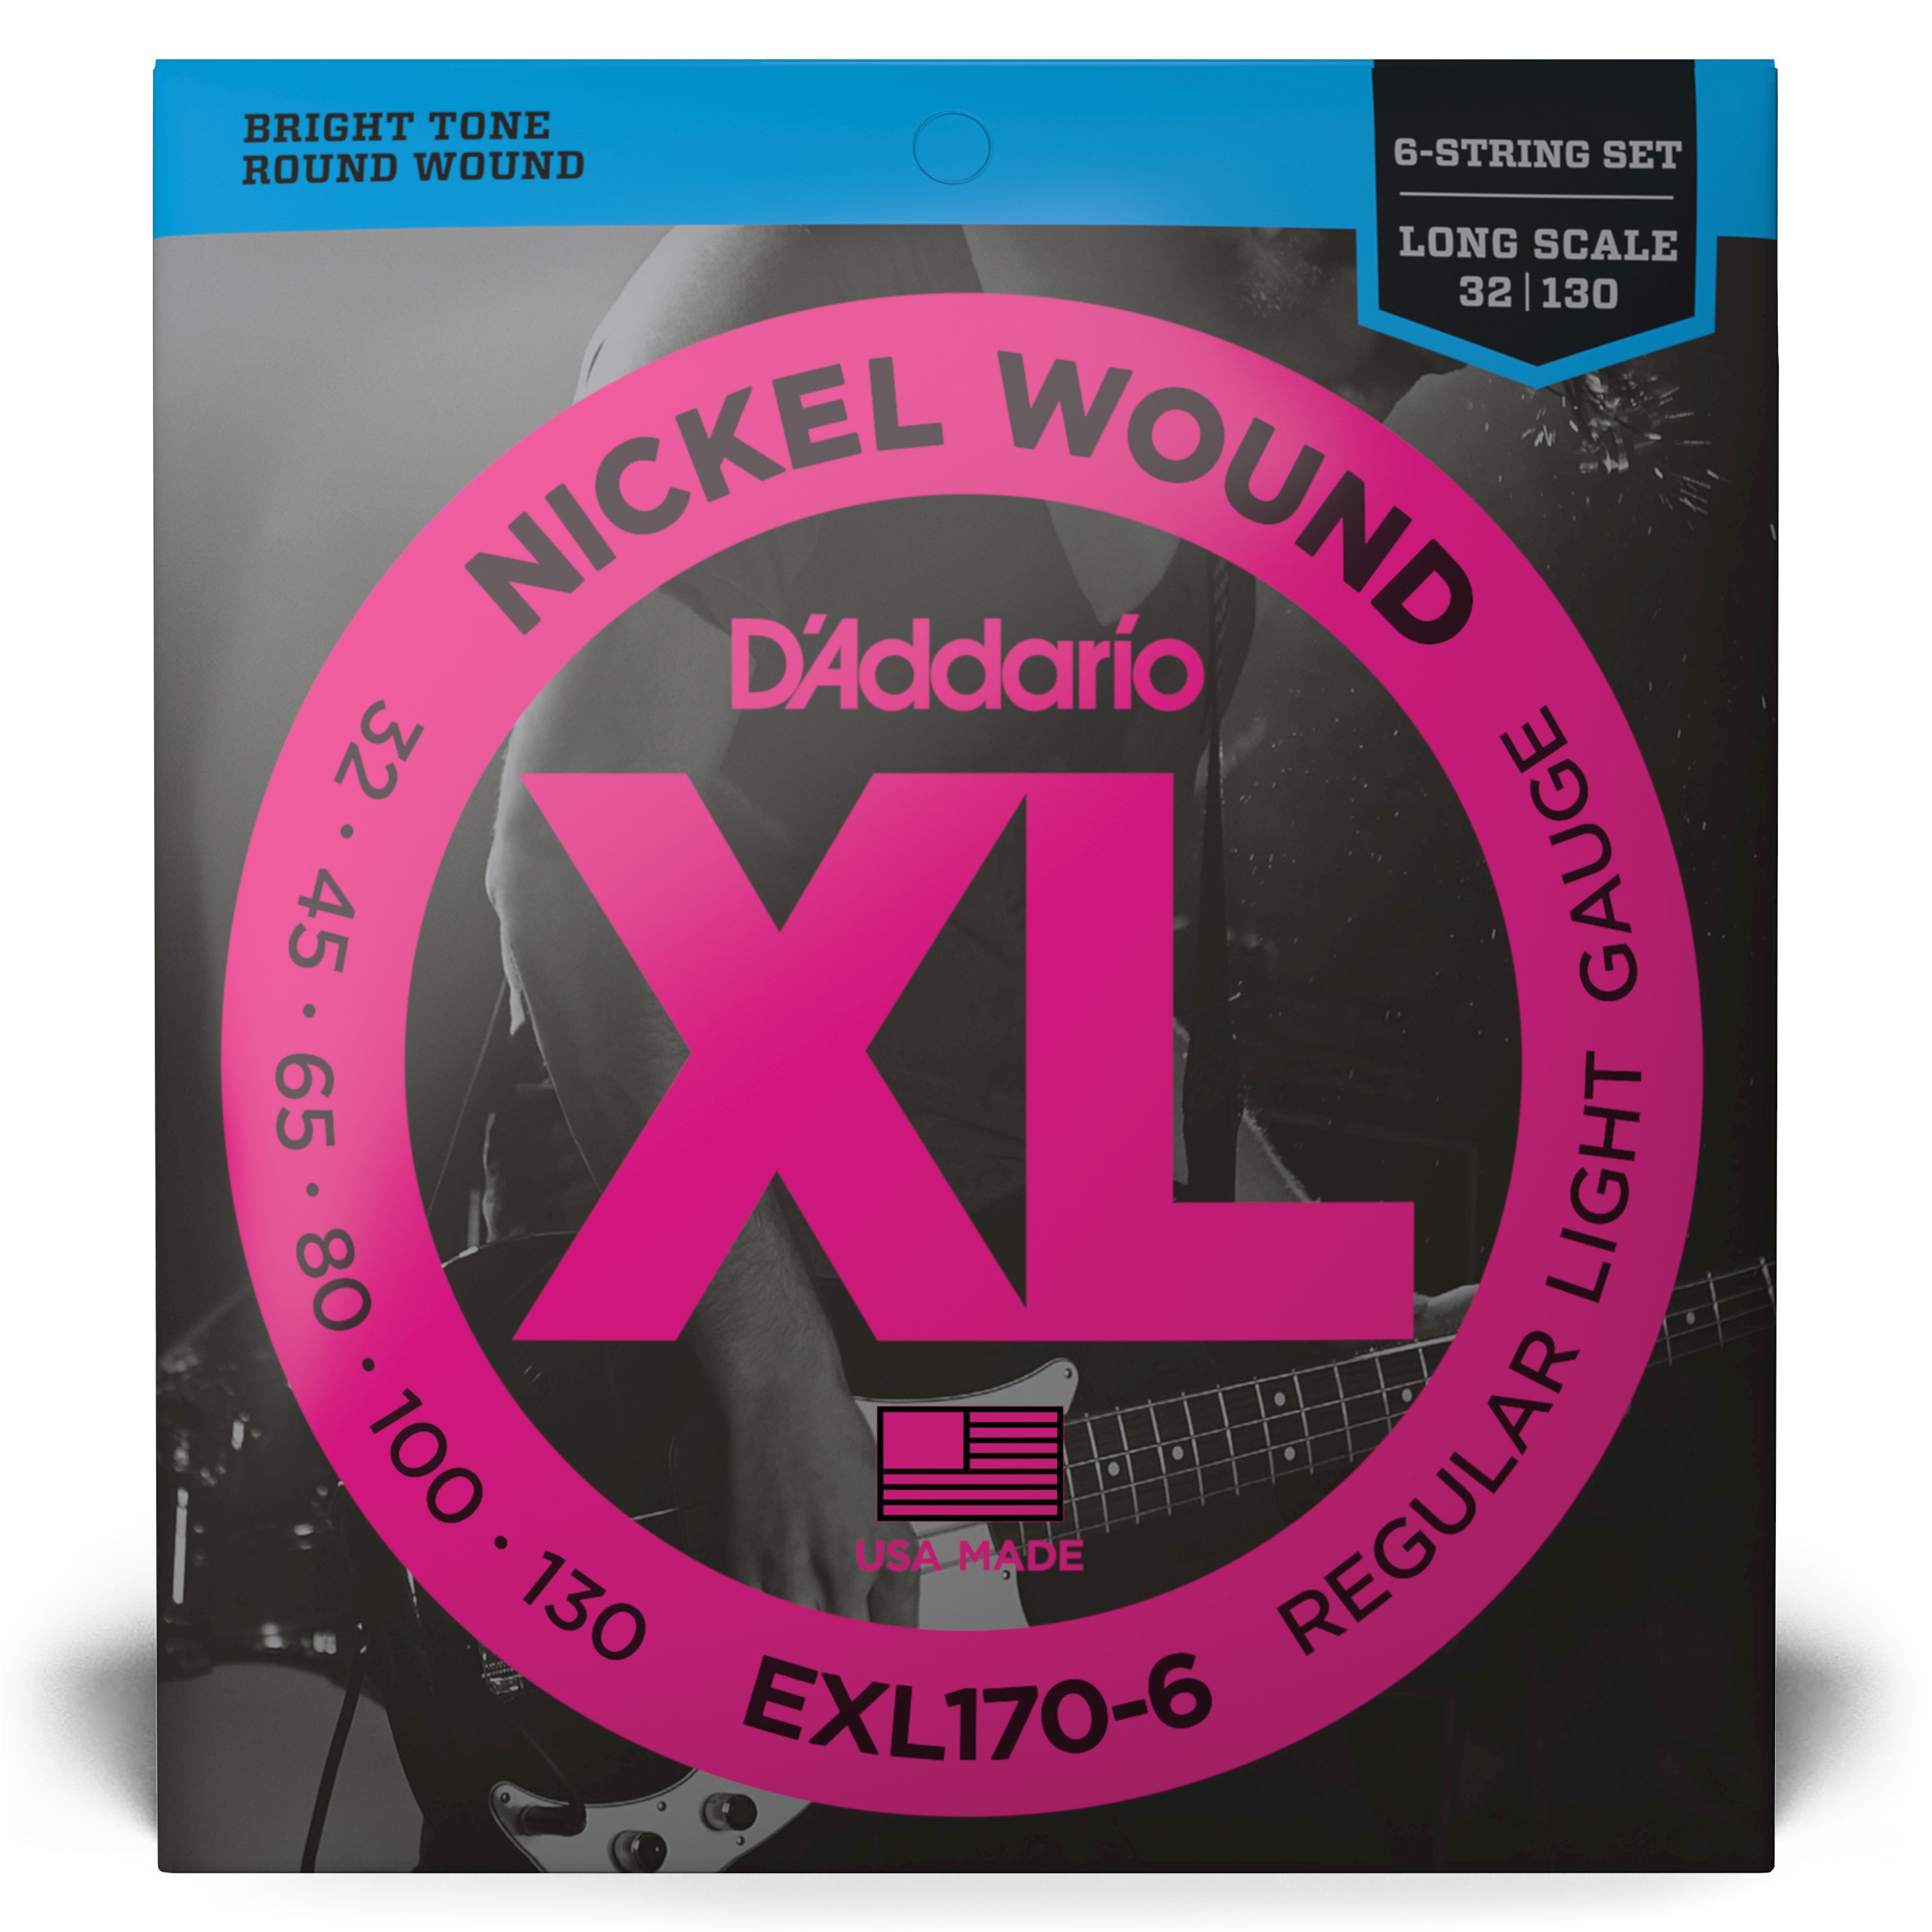 D'Addario EXL170-6 Nickel Wound 32-130 6-String Bass Guitar Strings, Long Scale